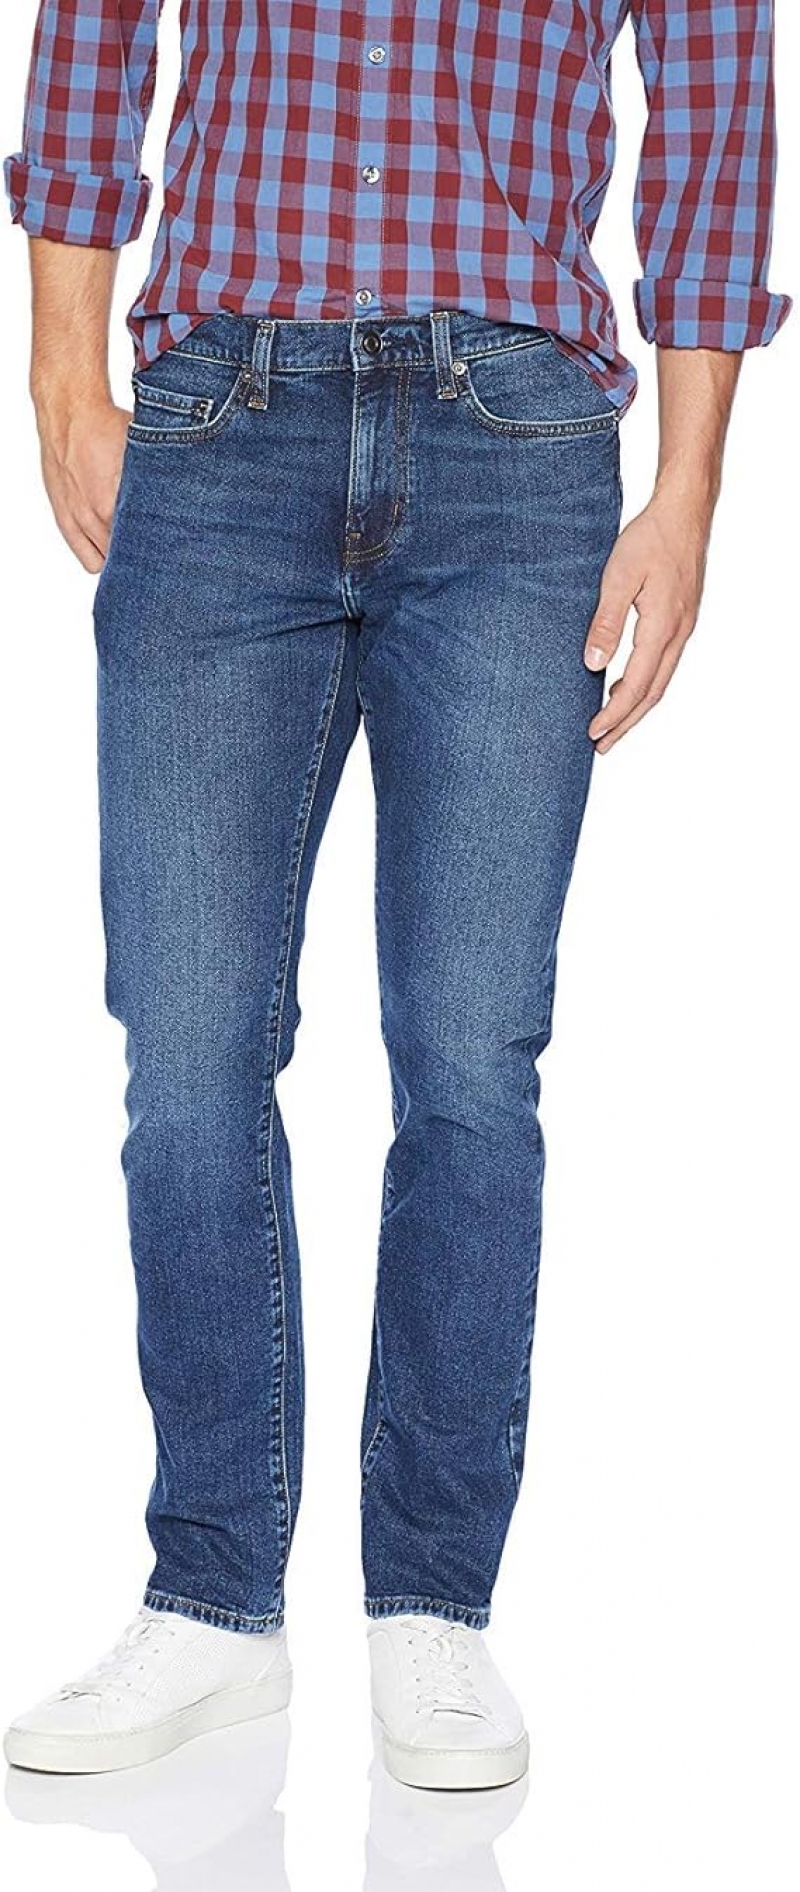 ihocon: [Amazon自家品牌] Amazon Essentials Men's Slim-Fit Jeans 男士牛仔褲